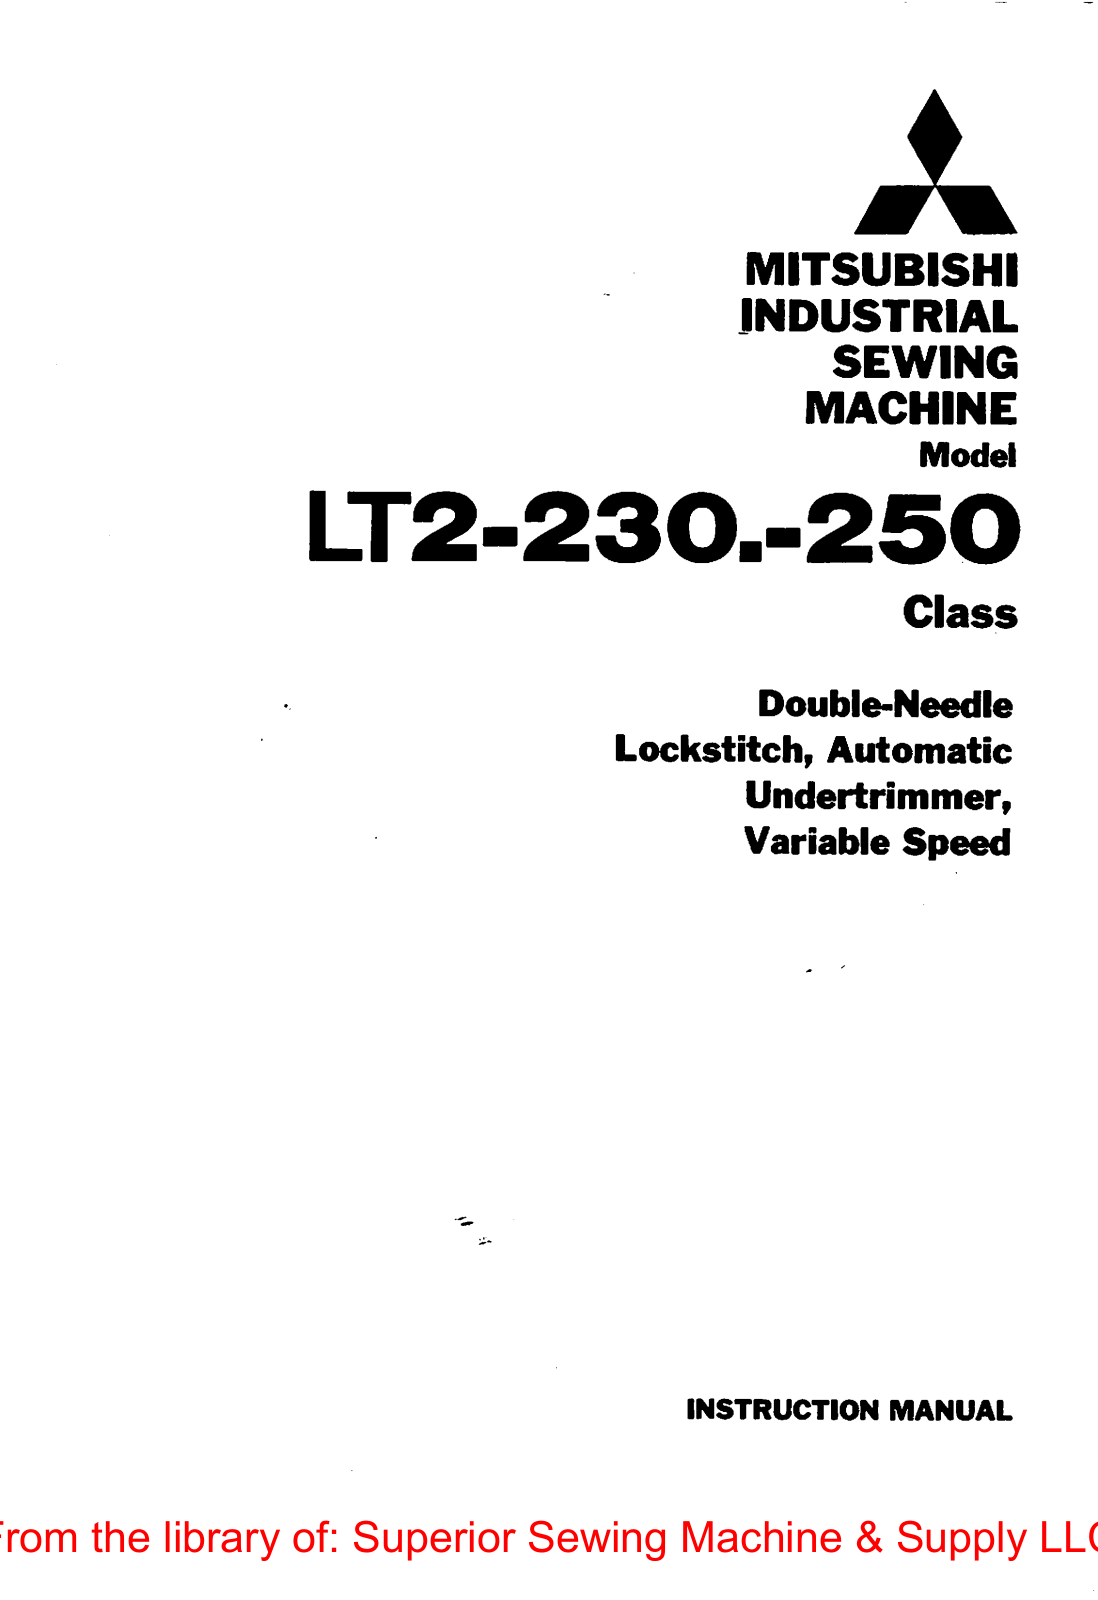 Mitsubishi LT2-230, LT2-250 Instruction Manual